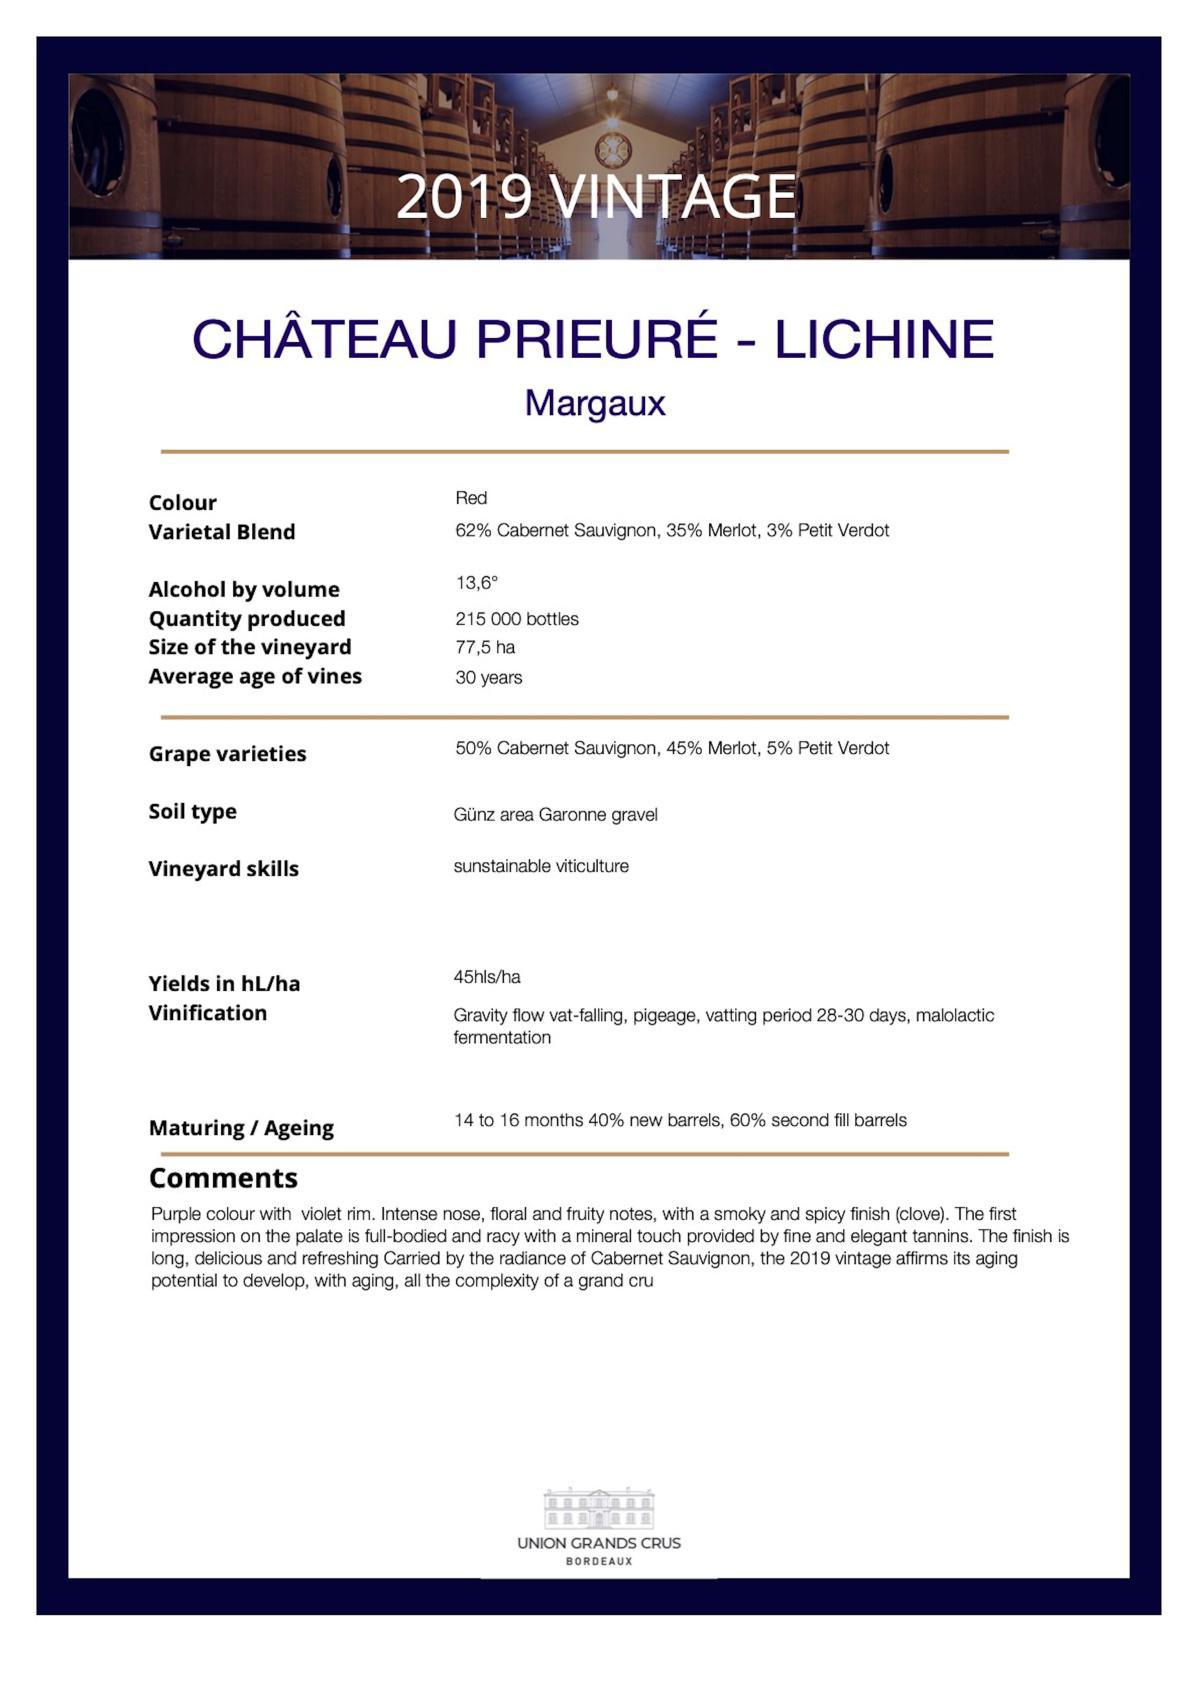 Château Prieuré - Lichine